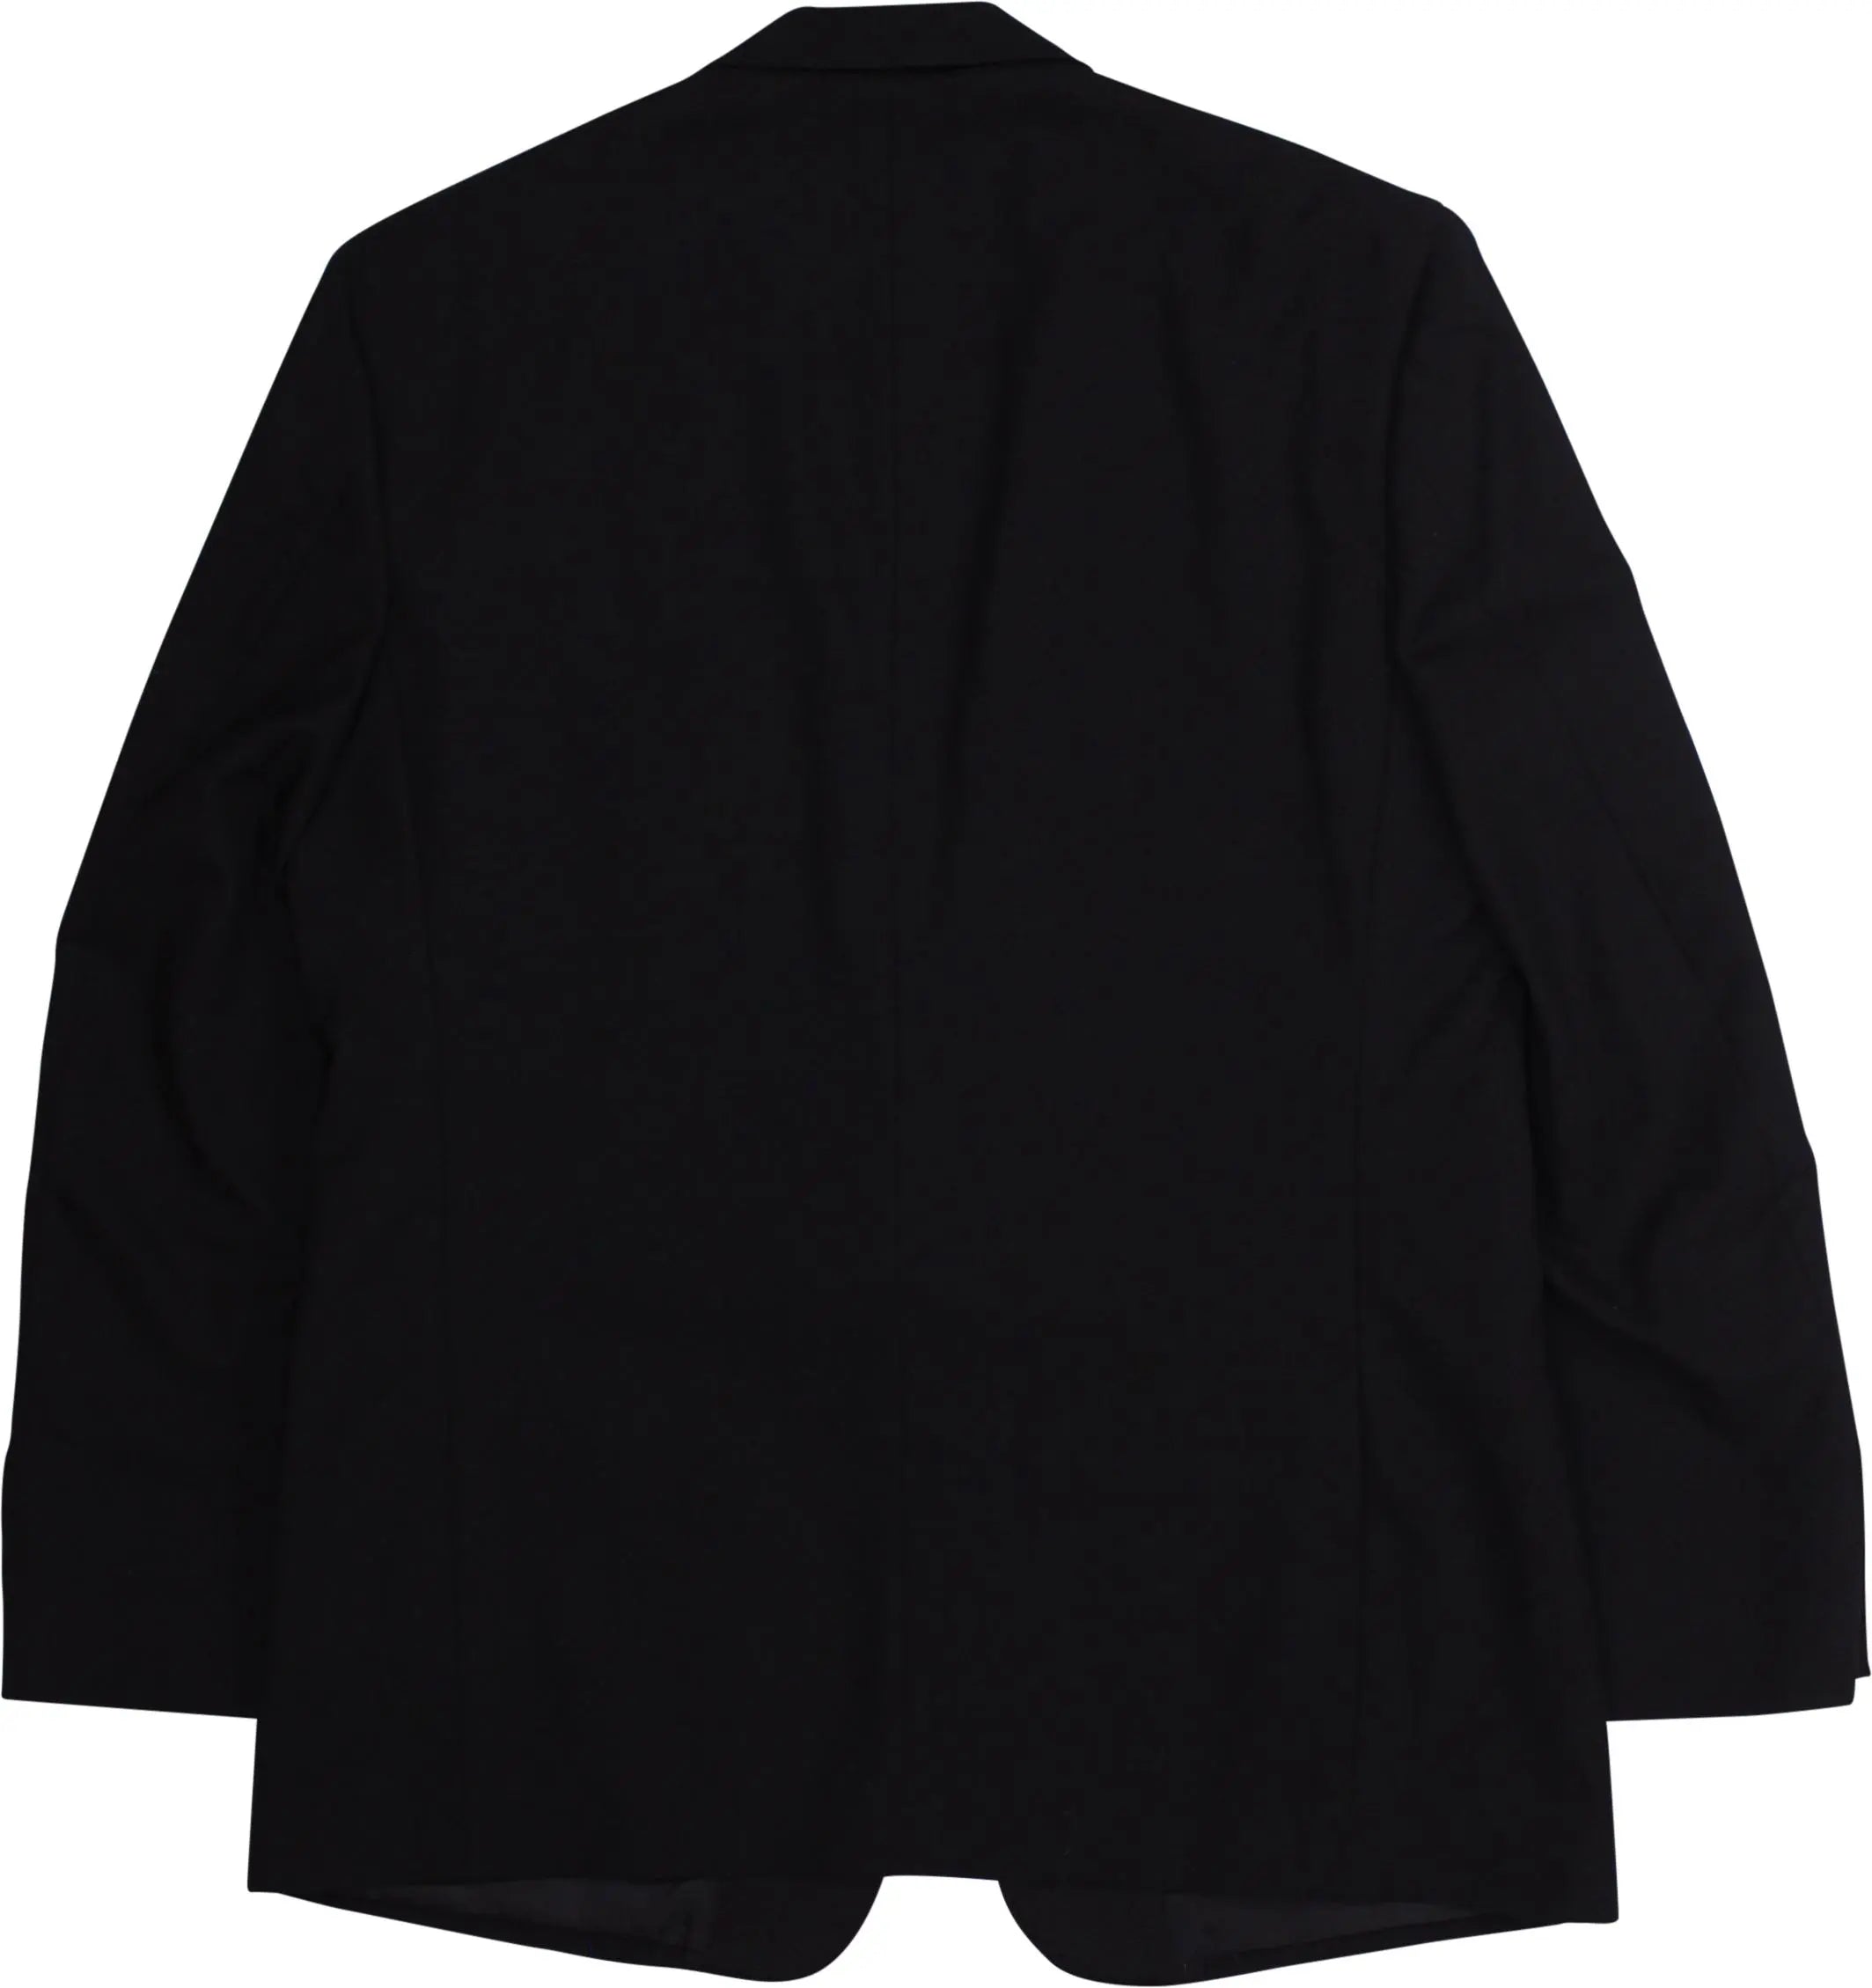 Yves Saint Laurent - Black Yves Saint Laurent Blazer- ThriftTale.com - Vintage and second handclothing